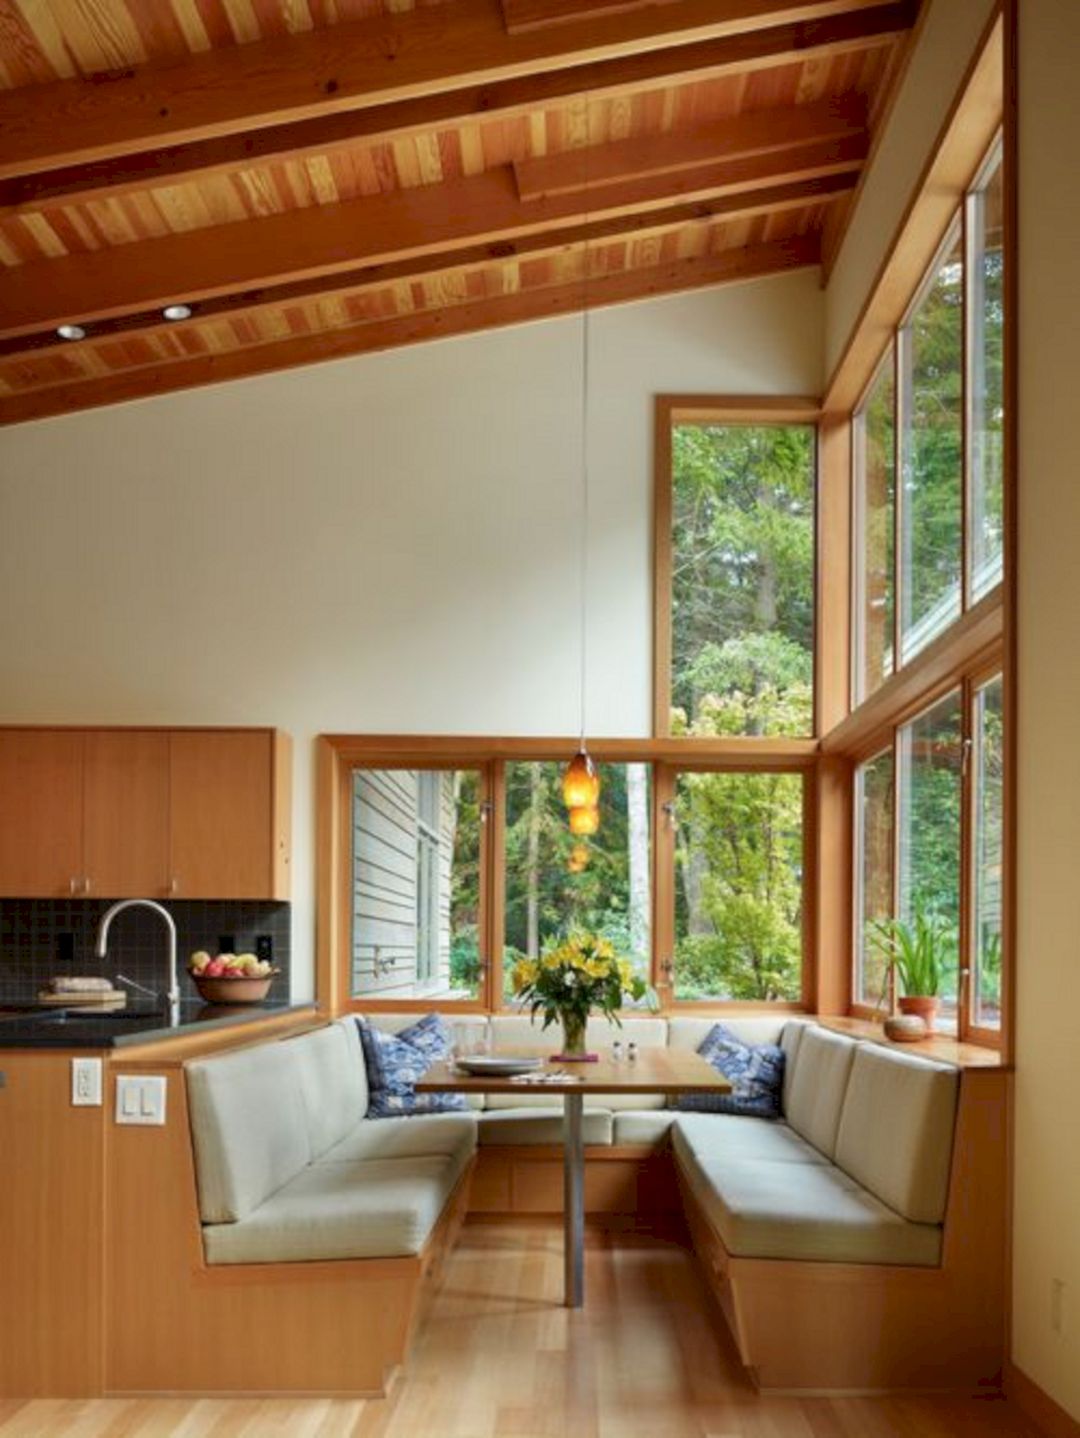 Northwest Contemporary Interior Design Style Ideas